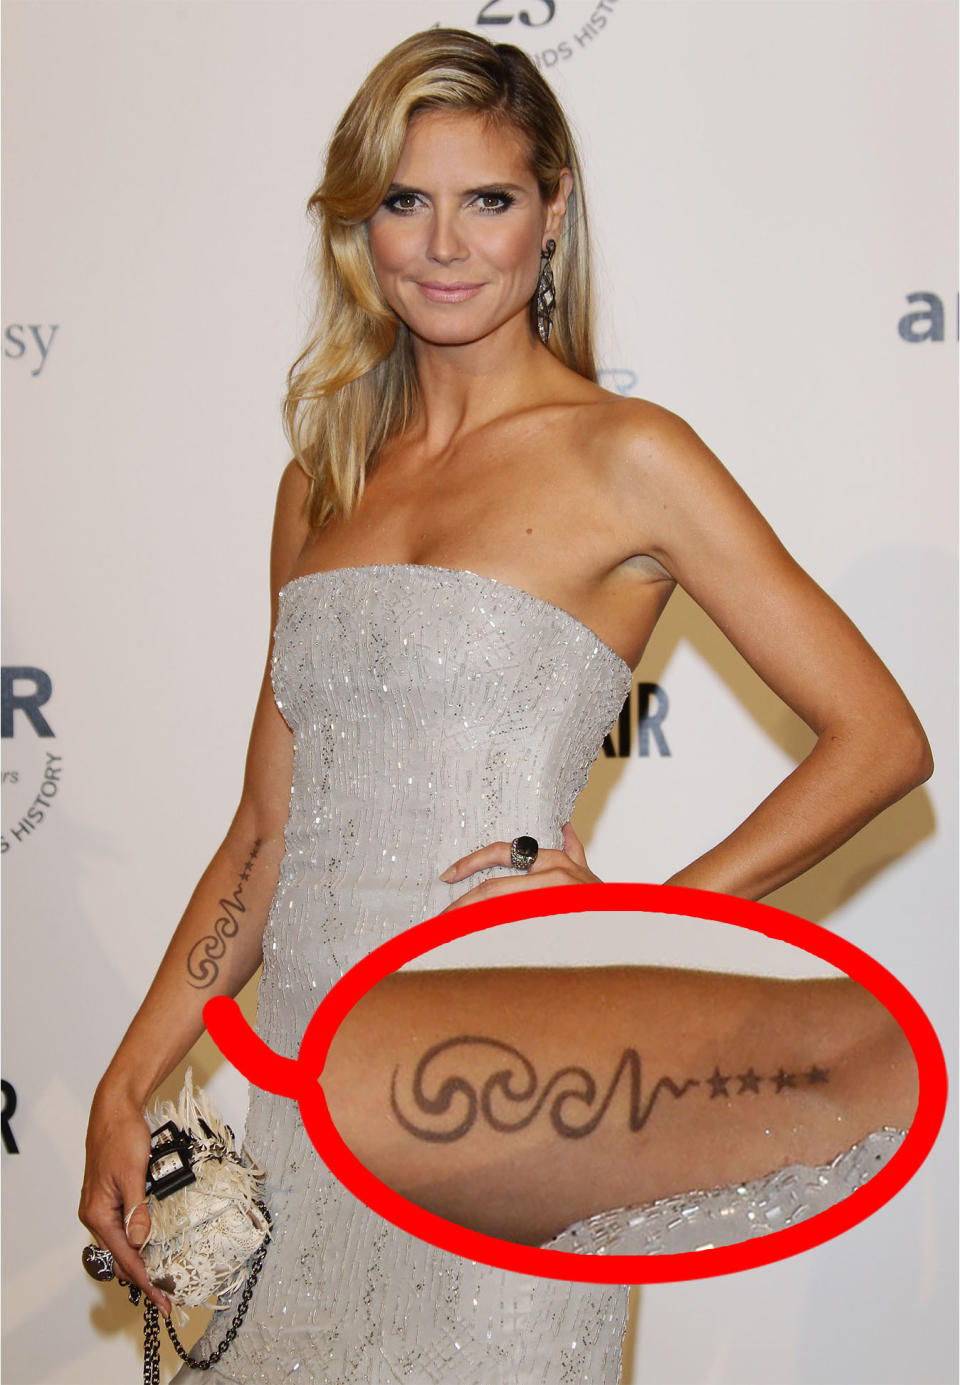 A design of Seal's name on Heidi's forearm